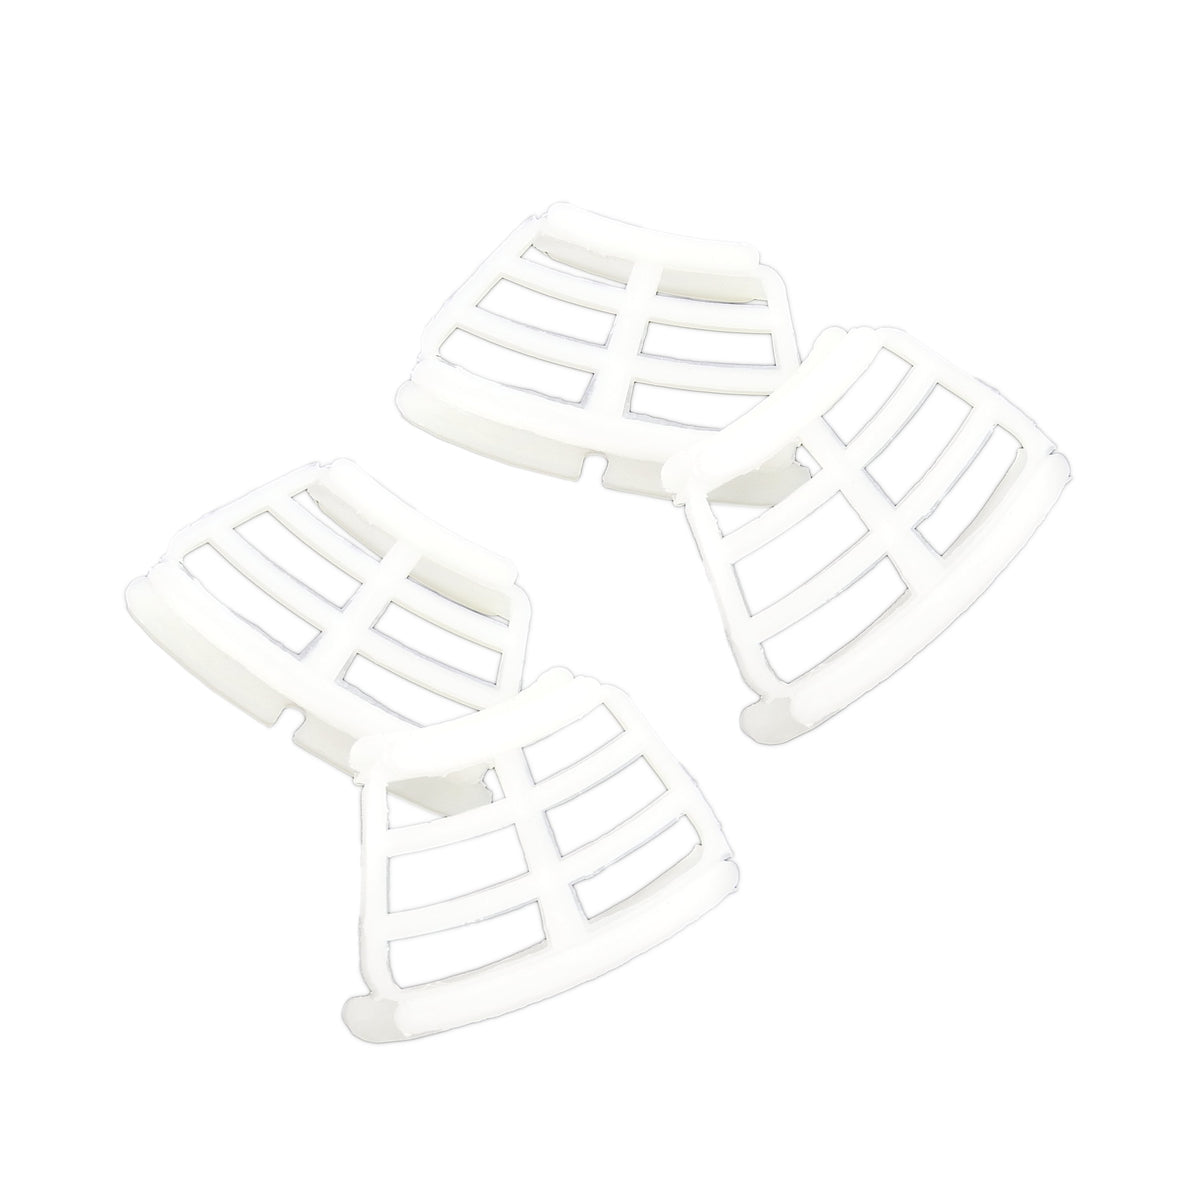 Lambretta - Disc Hub Window Cover Set - White Plastic